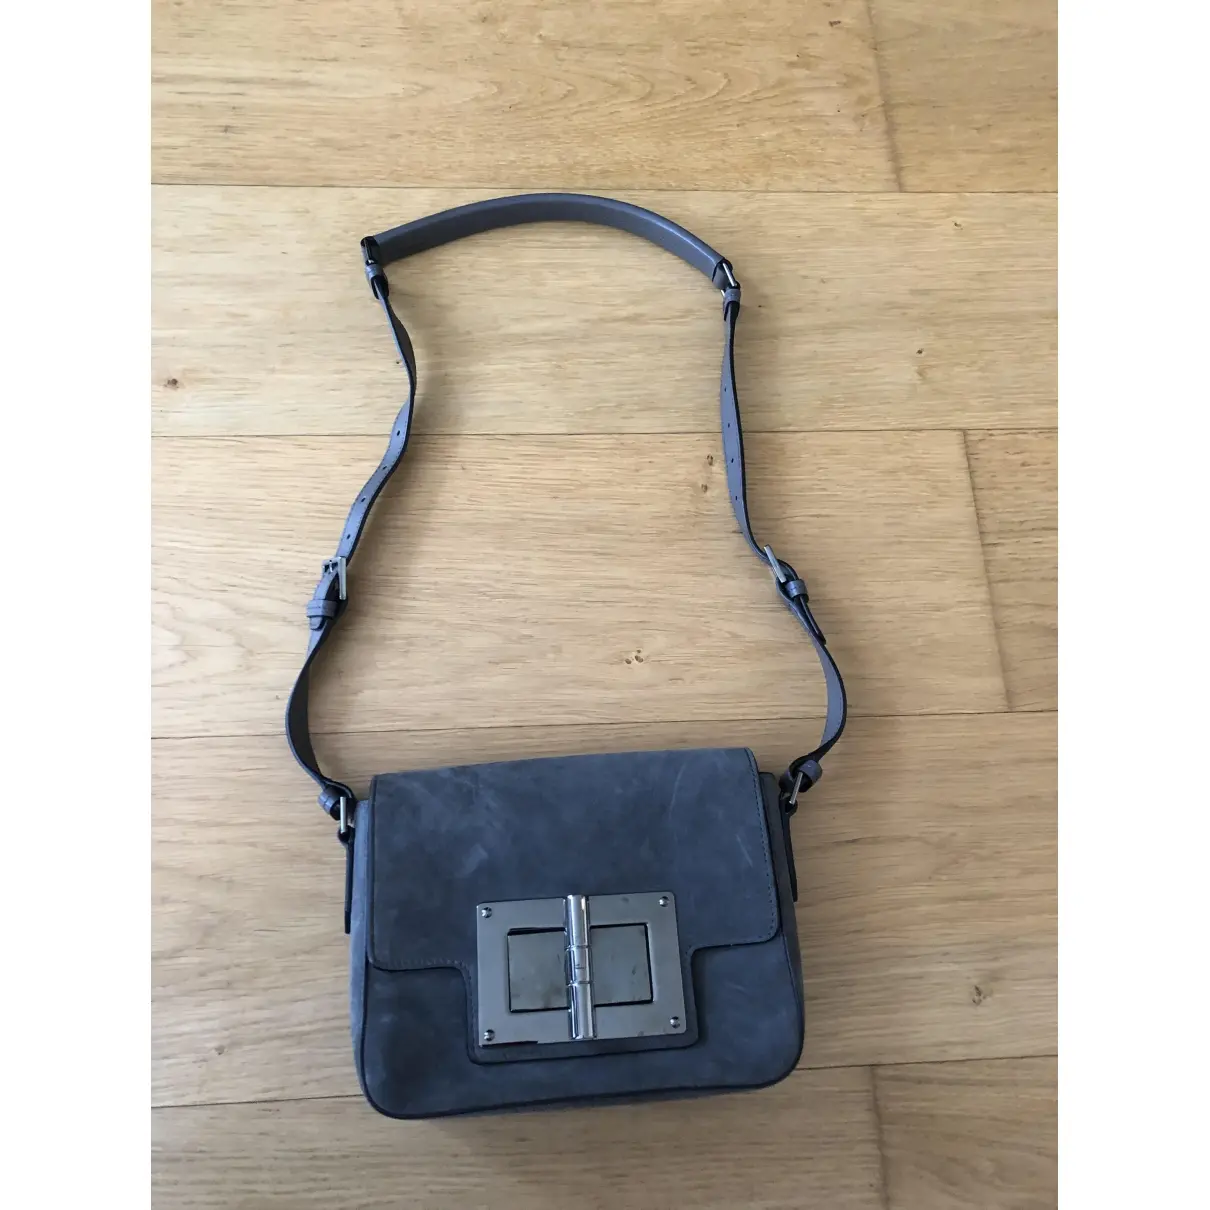 Tom Ford Natalia handbag for sale